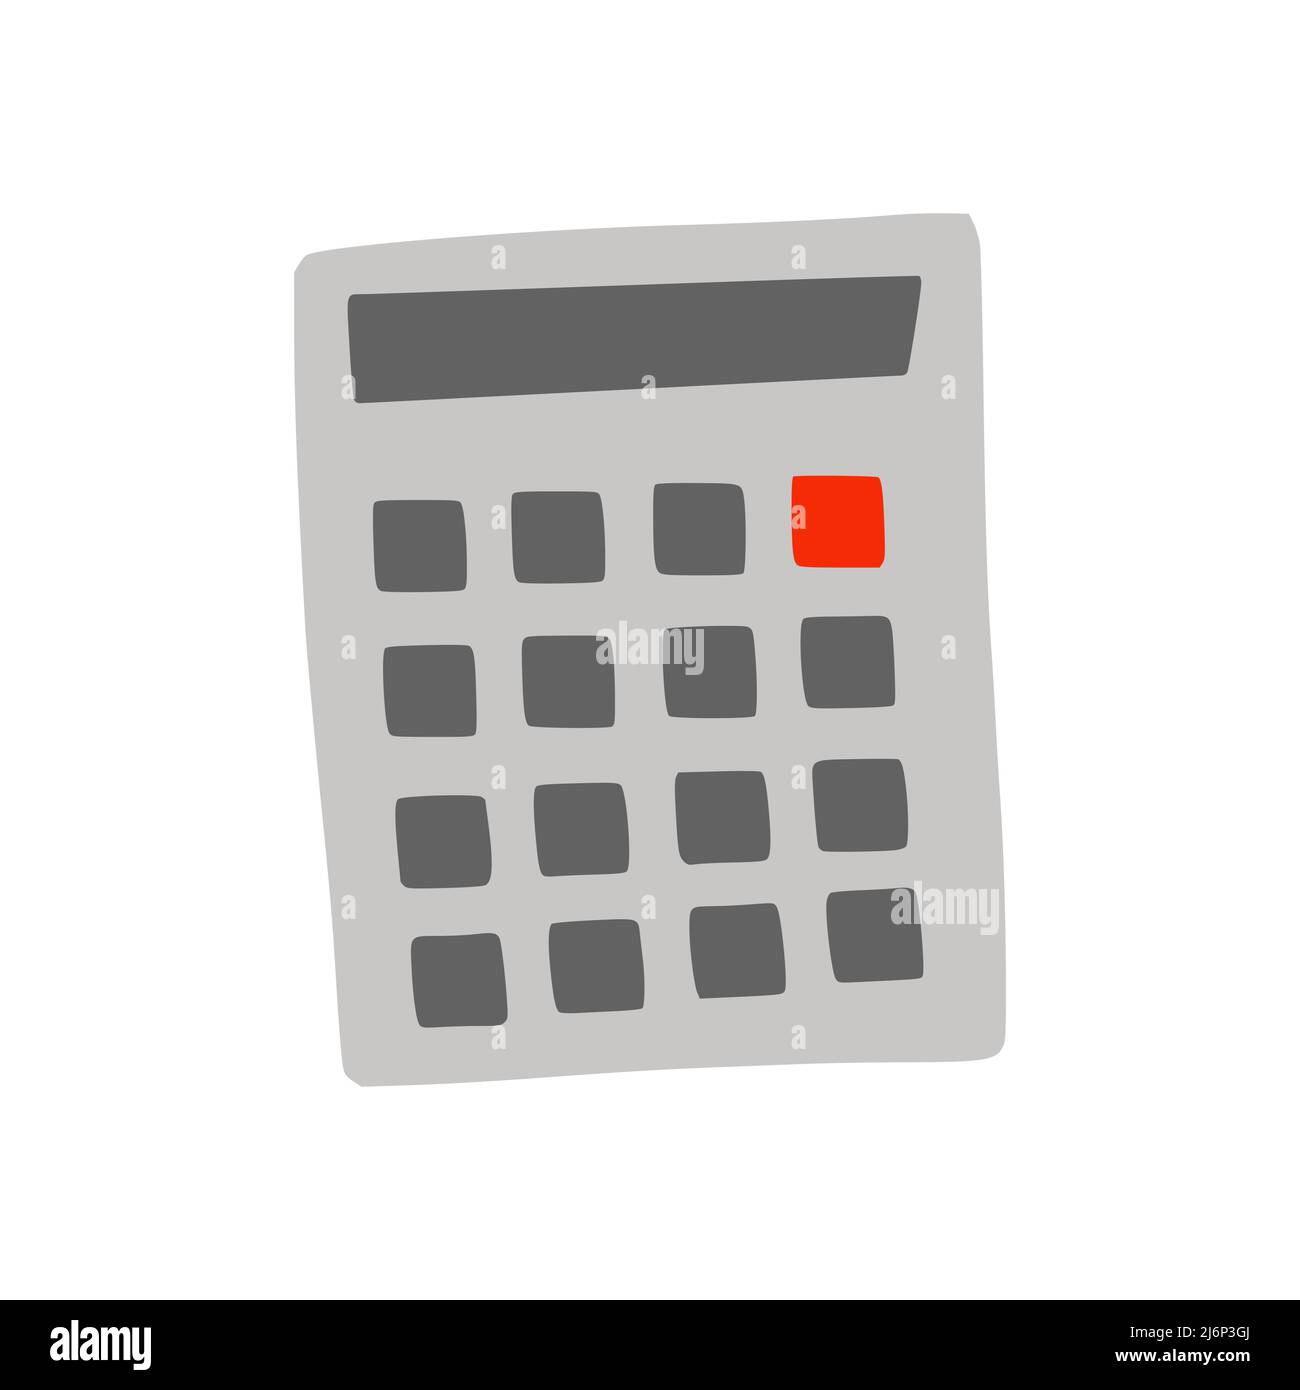 Calculating tool Immagini Vettoriali Stock - Alamy